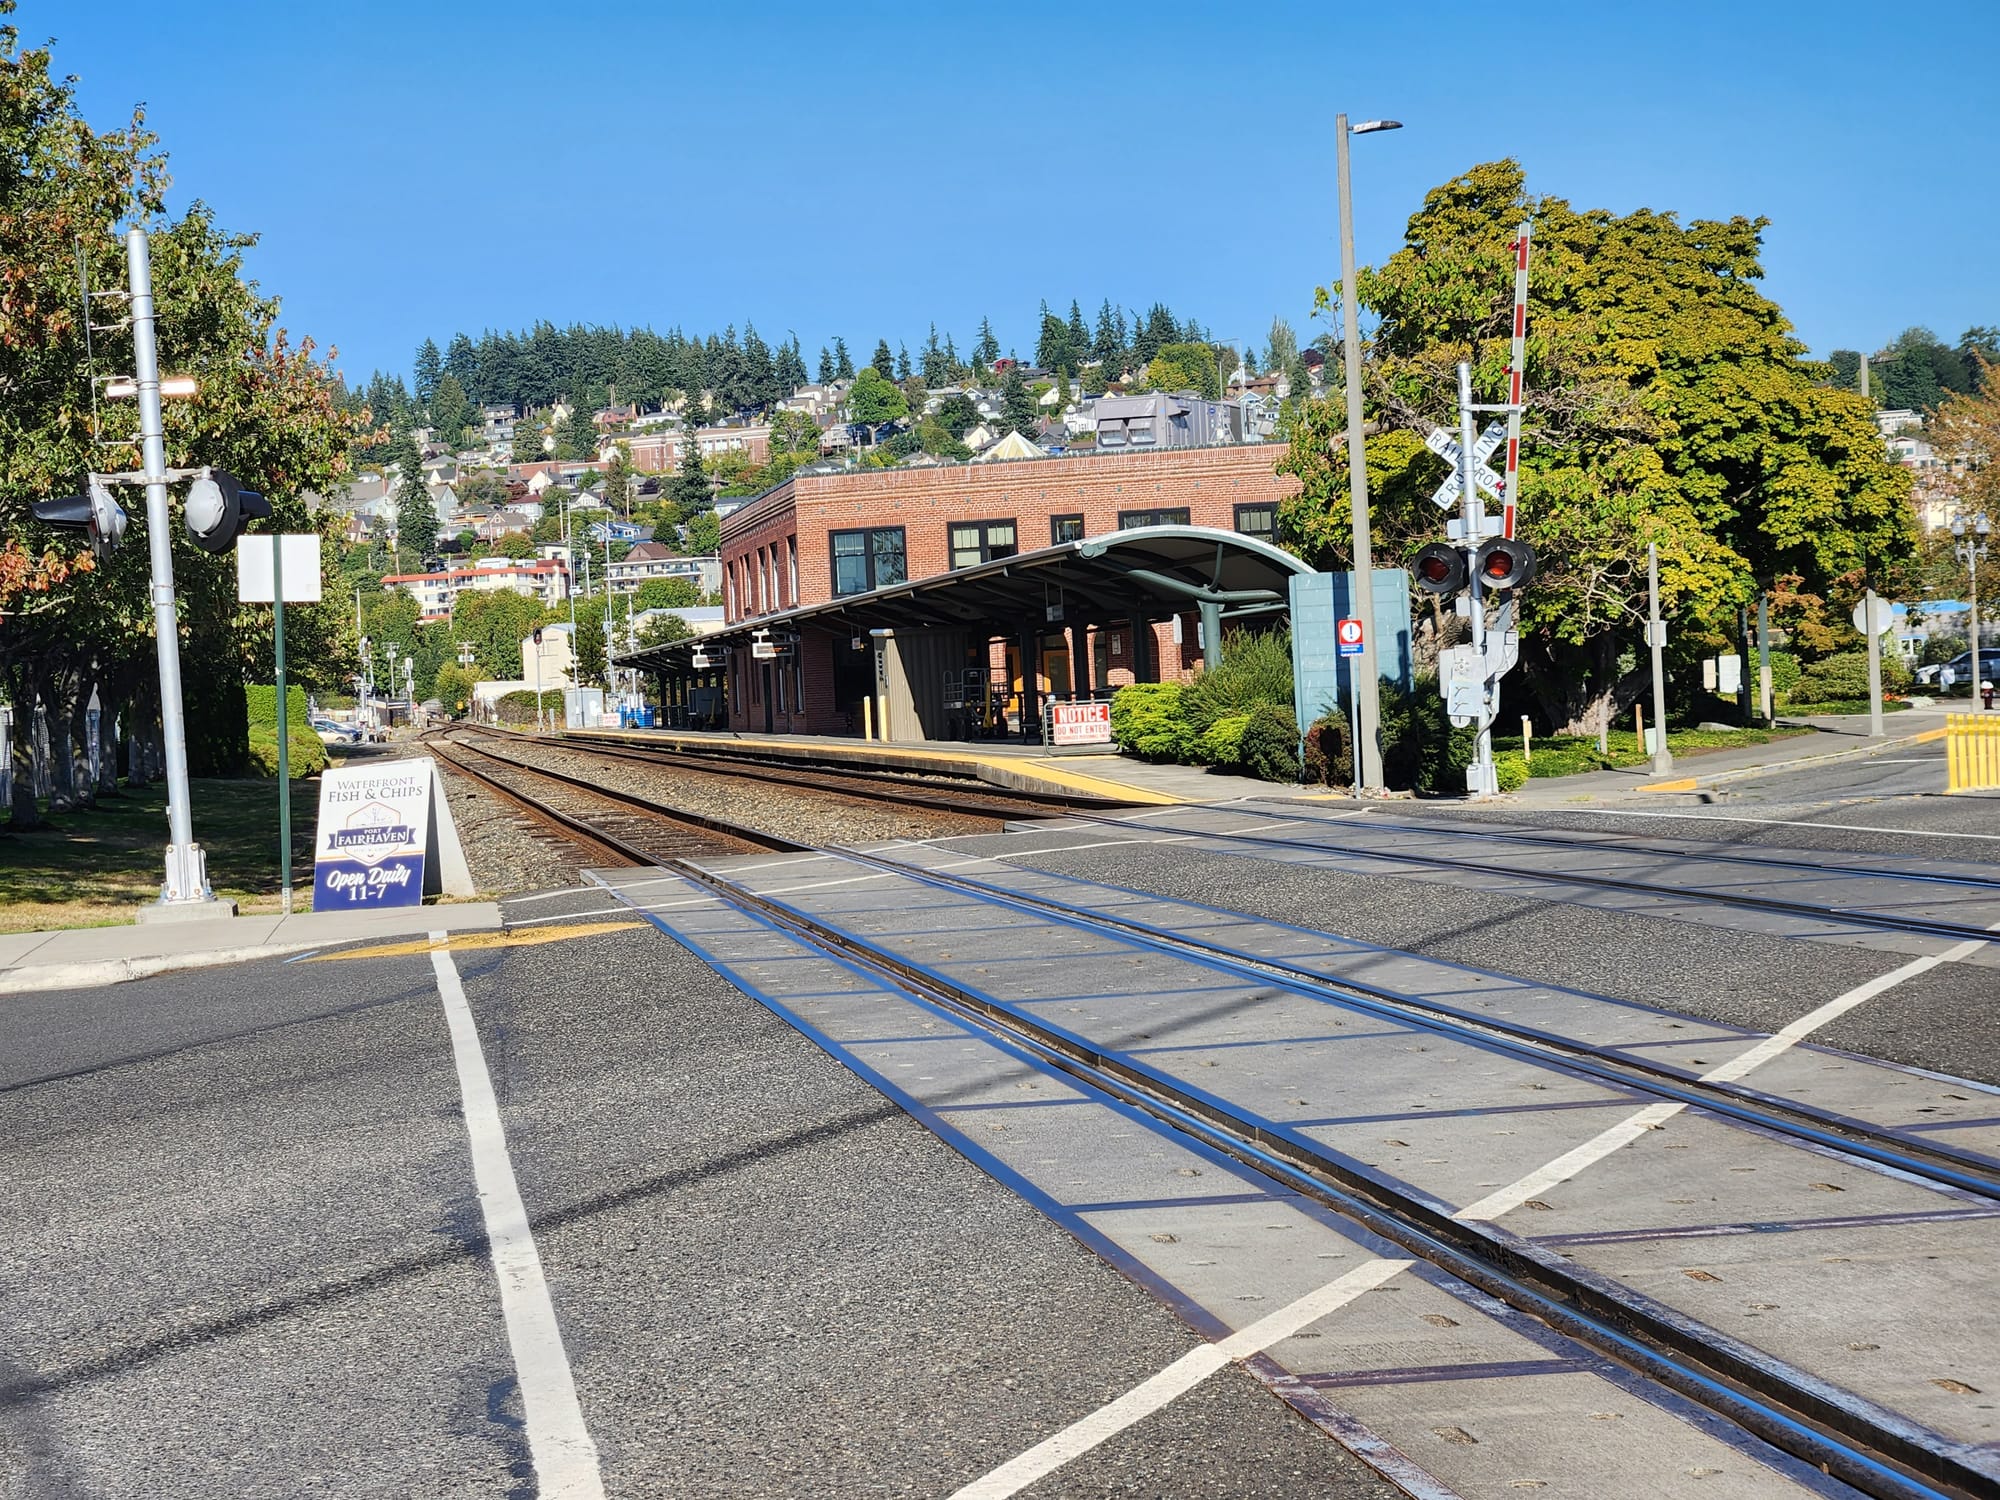 Two railroad tracks cut across a street and serve an adjacent train platform at a red brick station.